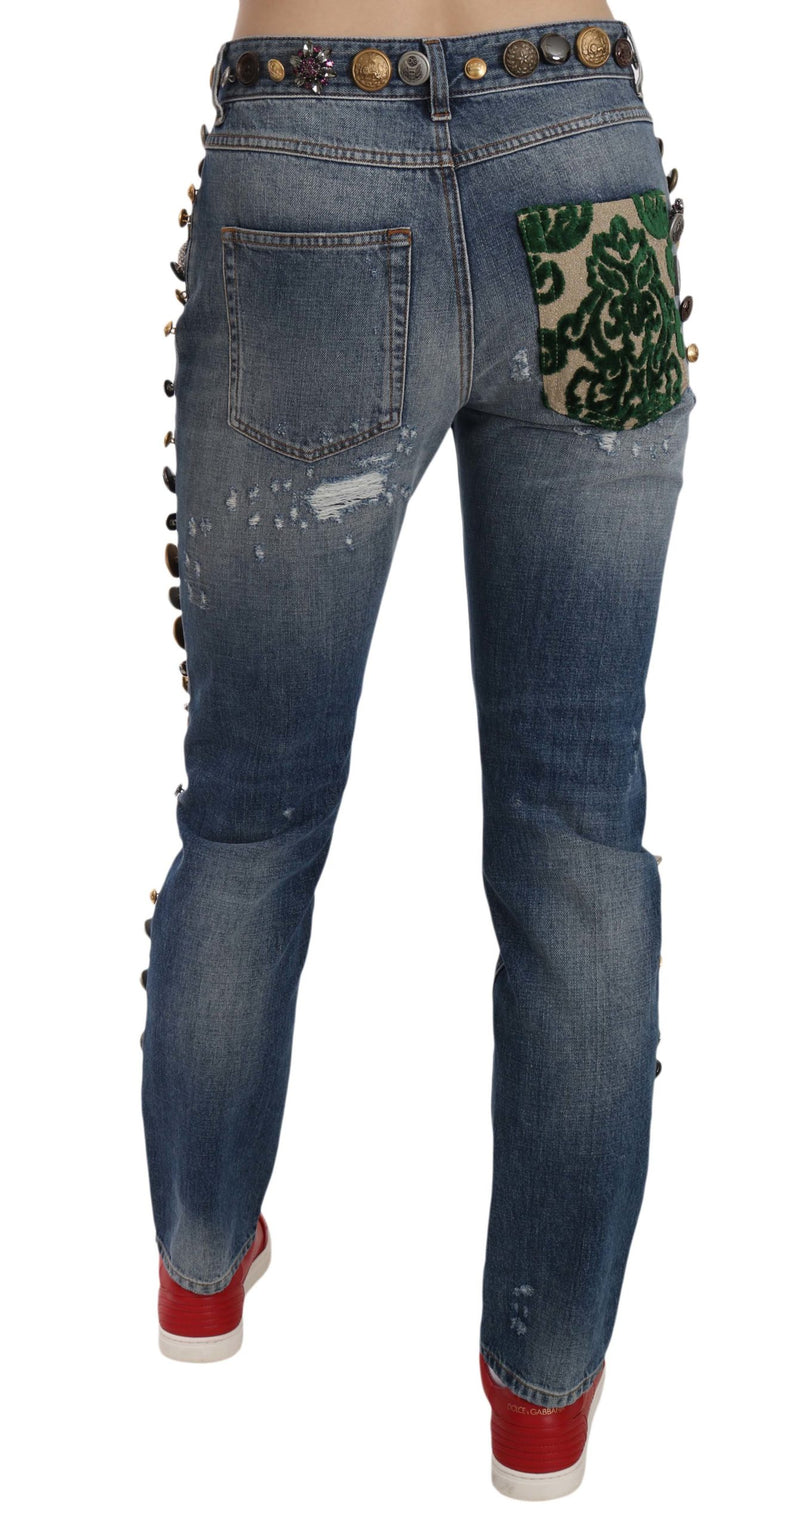 Dolce Gabbana Jeans Denim Comfort Pants Trousers 5 Pockets Metal Plate 46 |  eBay